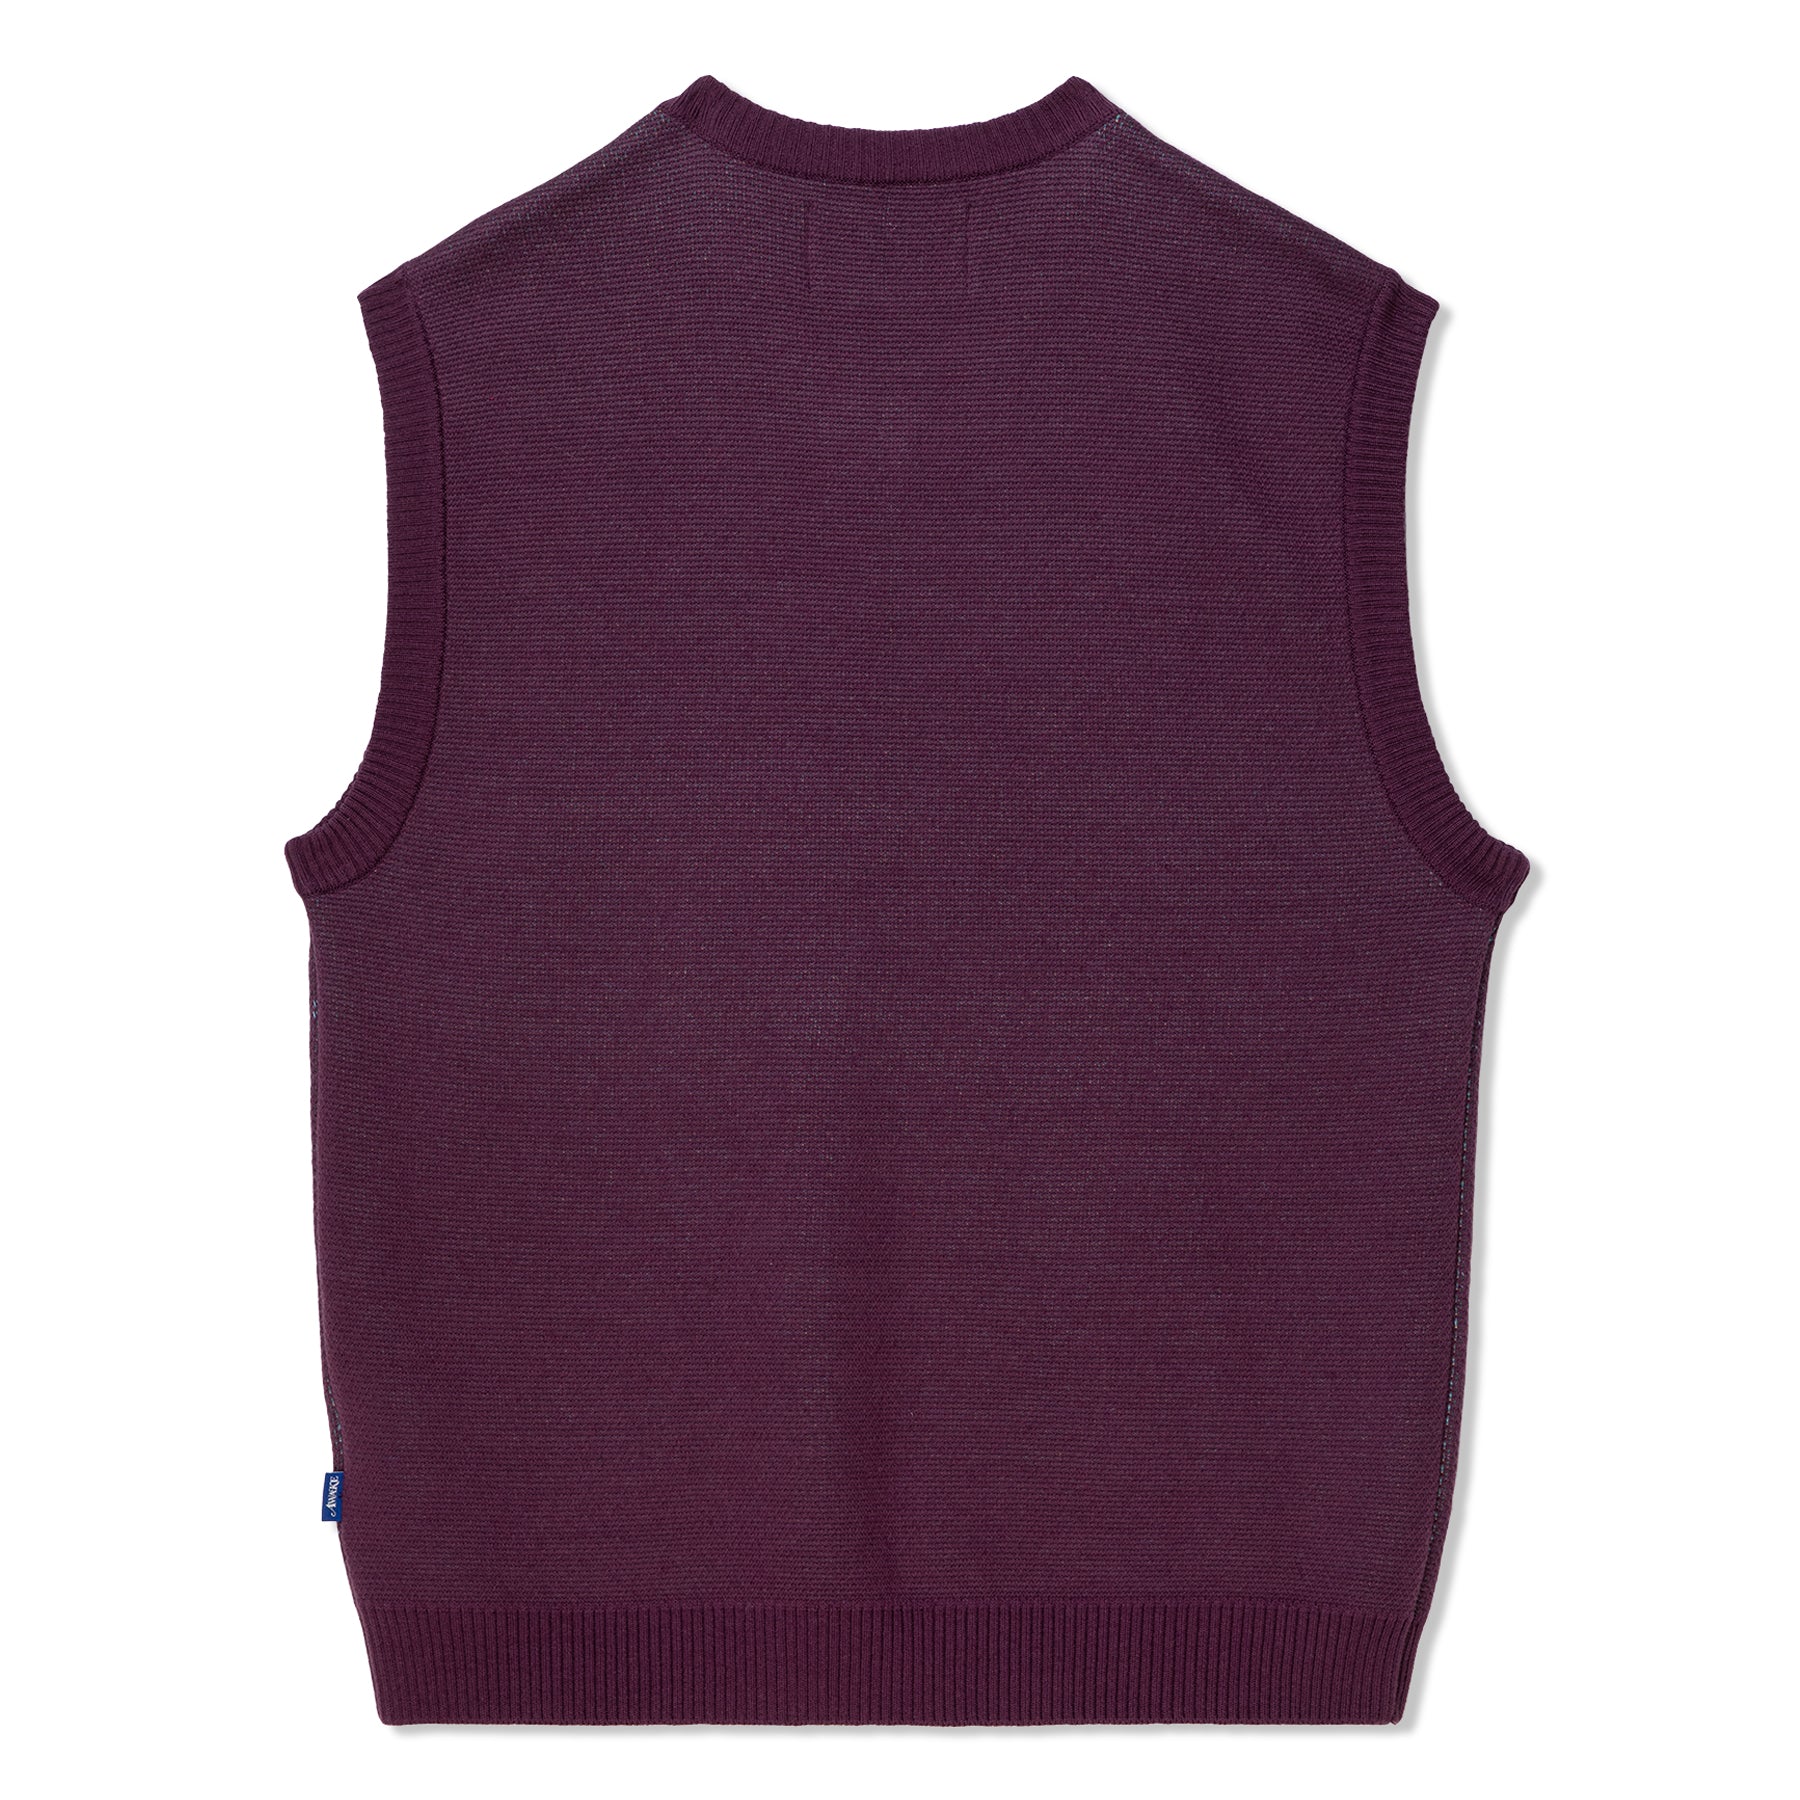 AWAKE Floral Sweater Vest (Magenta) – Concepts